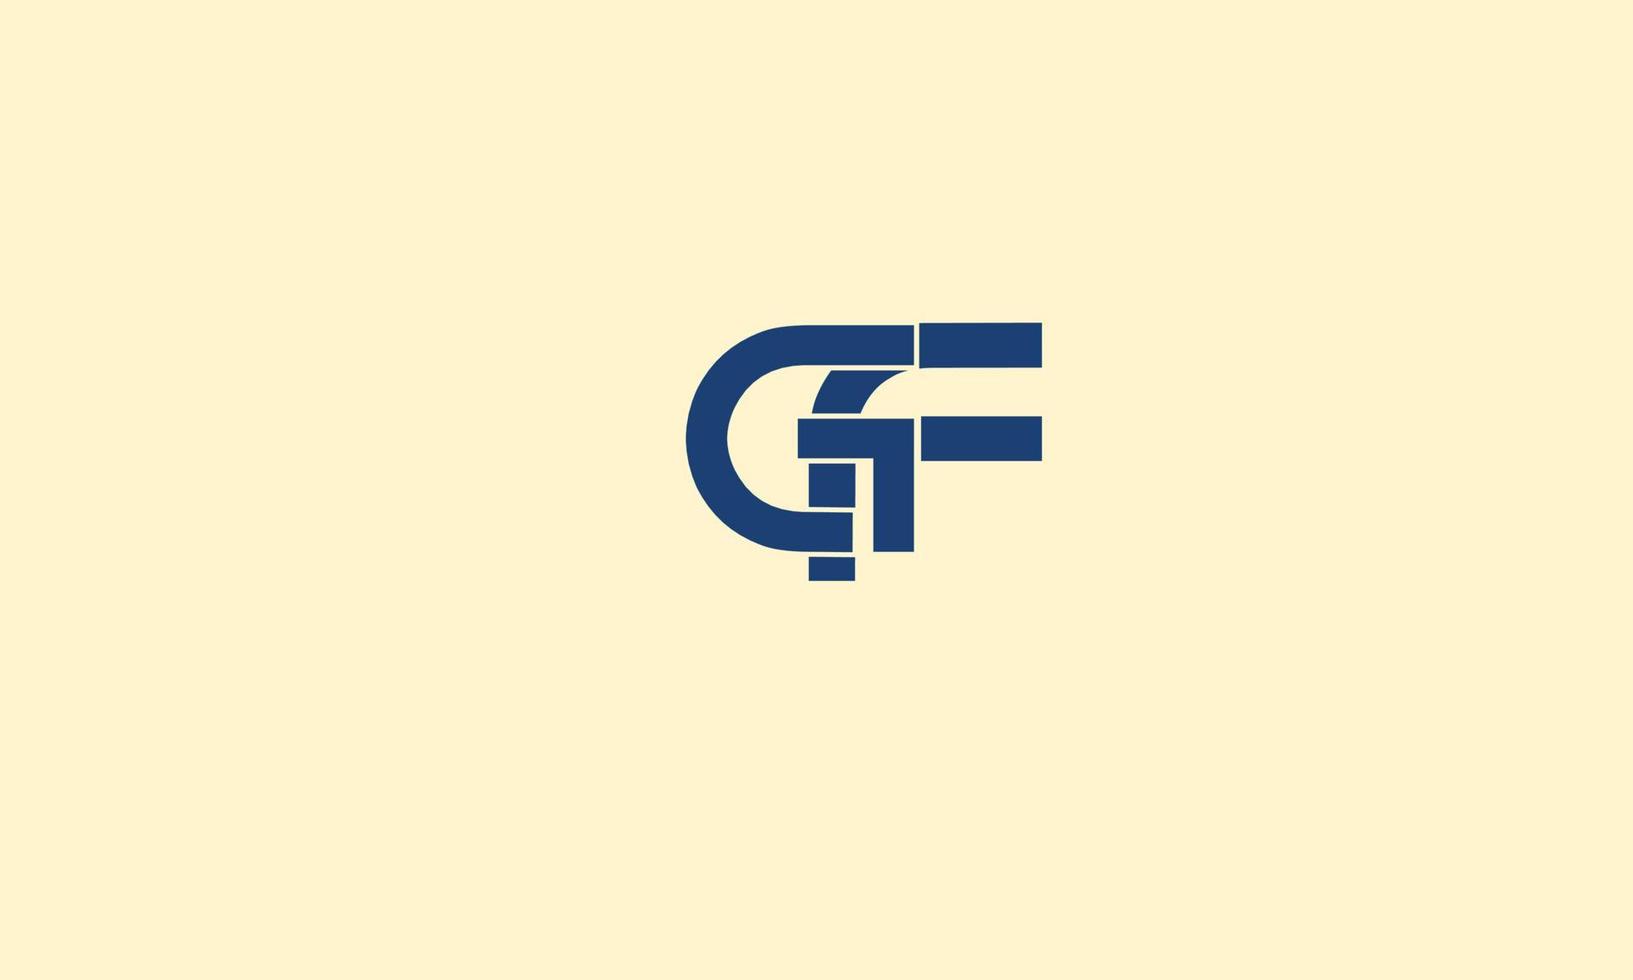 letras do alfabeto iniciais monograma logotipo gf, gf, f e g vetor